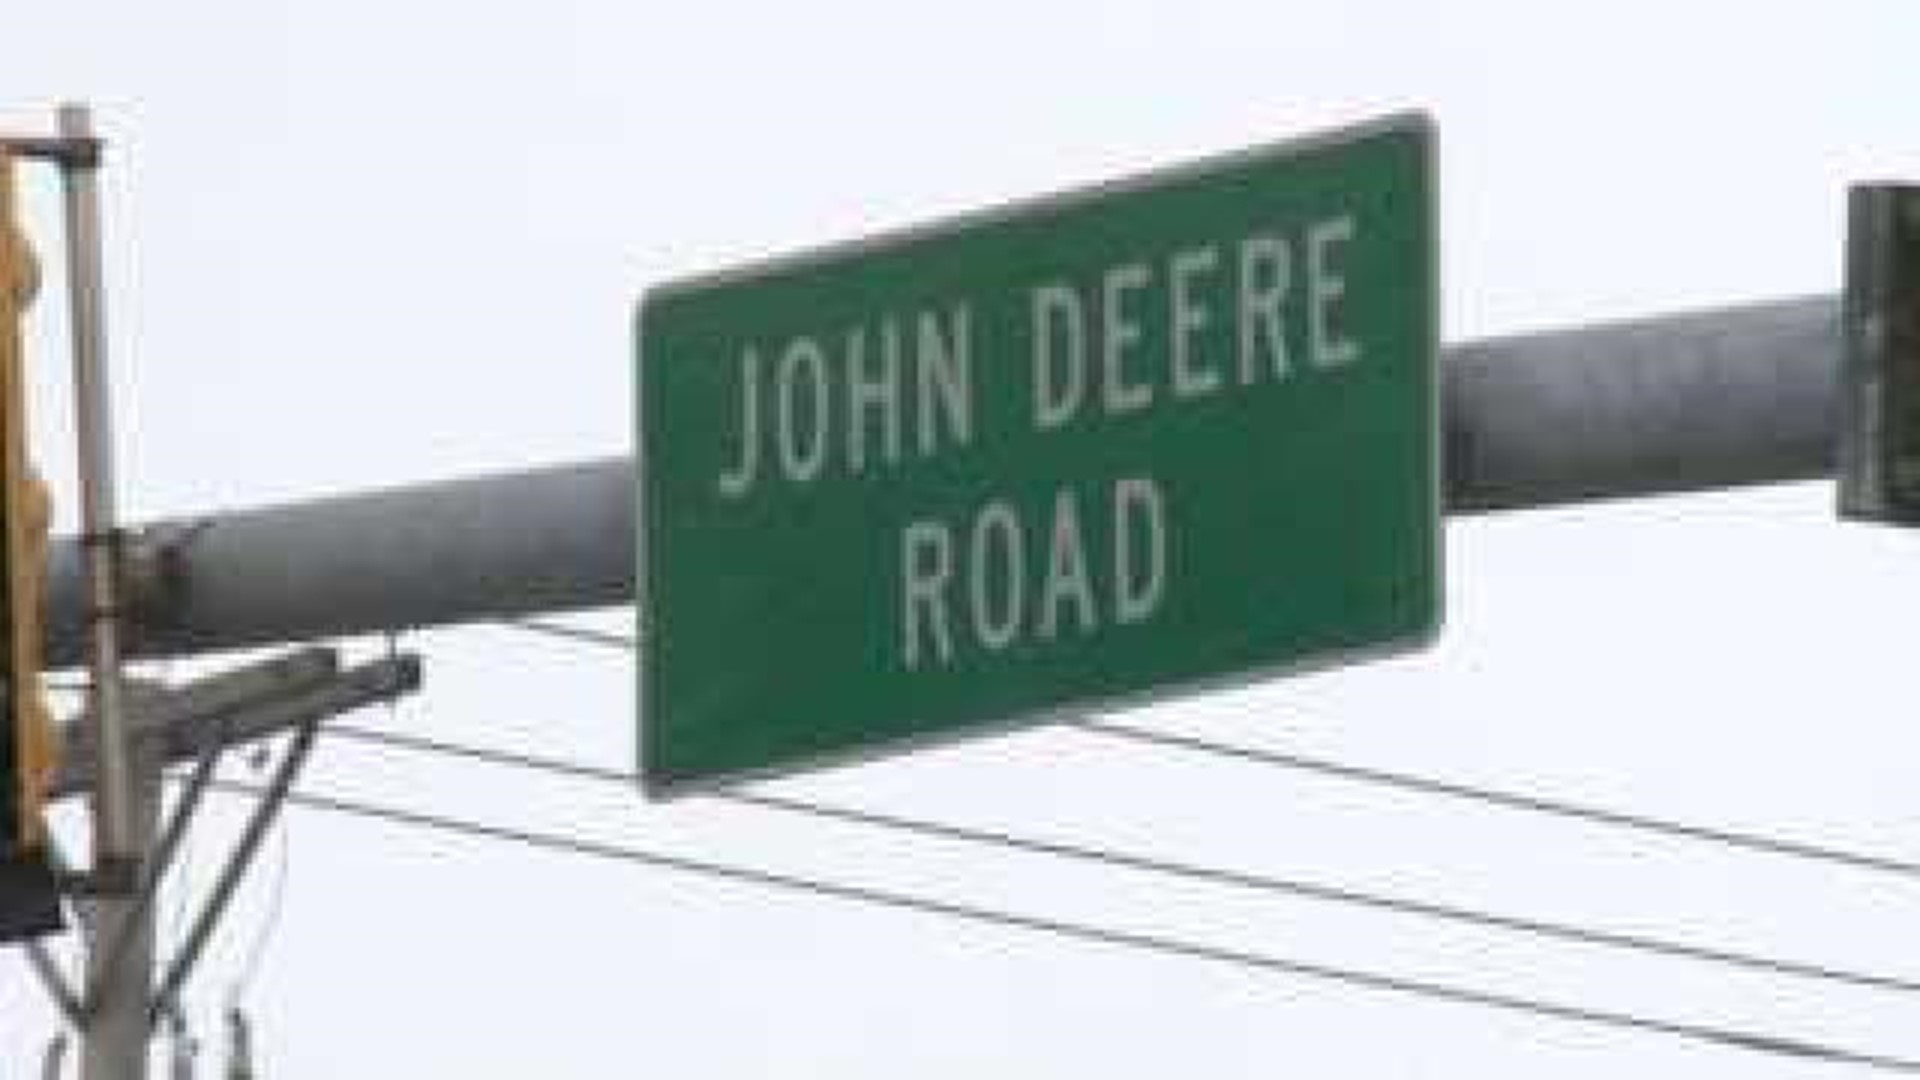 John Deere Road changes coming soon